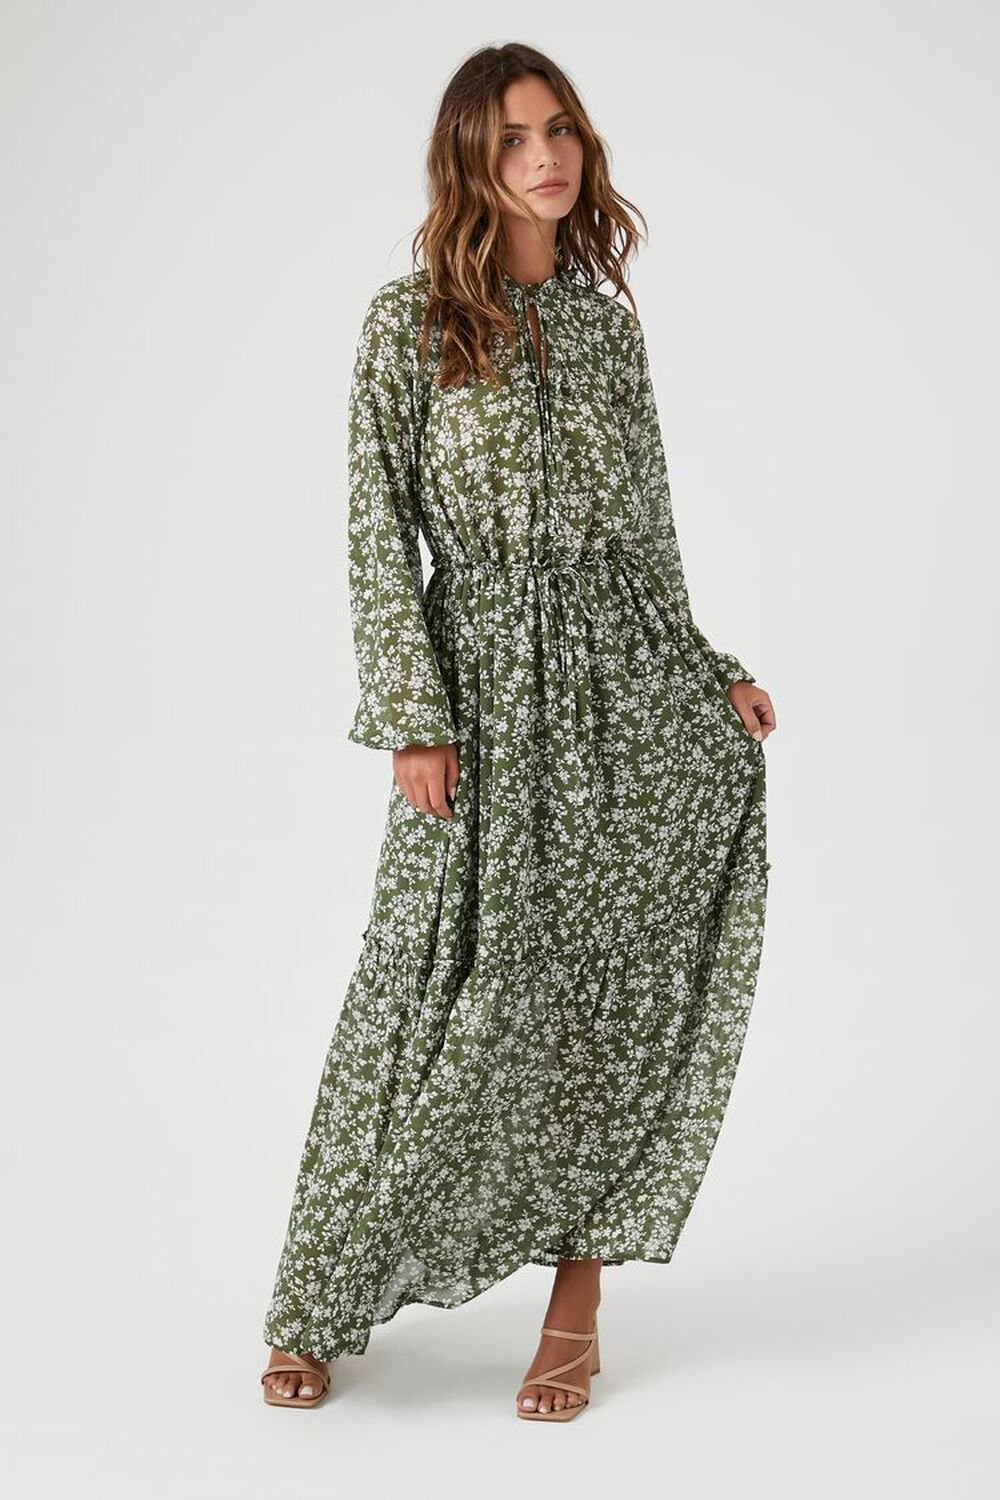 OLIVE/MULTI Chiffon Floral Print Midi Dress, image 1